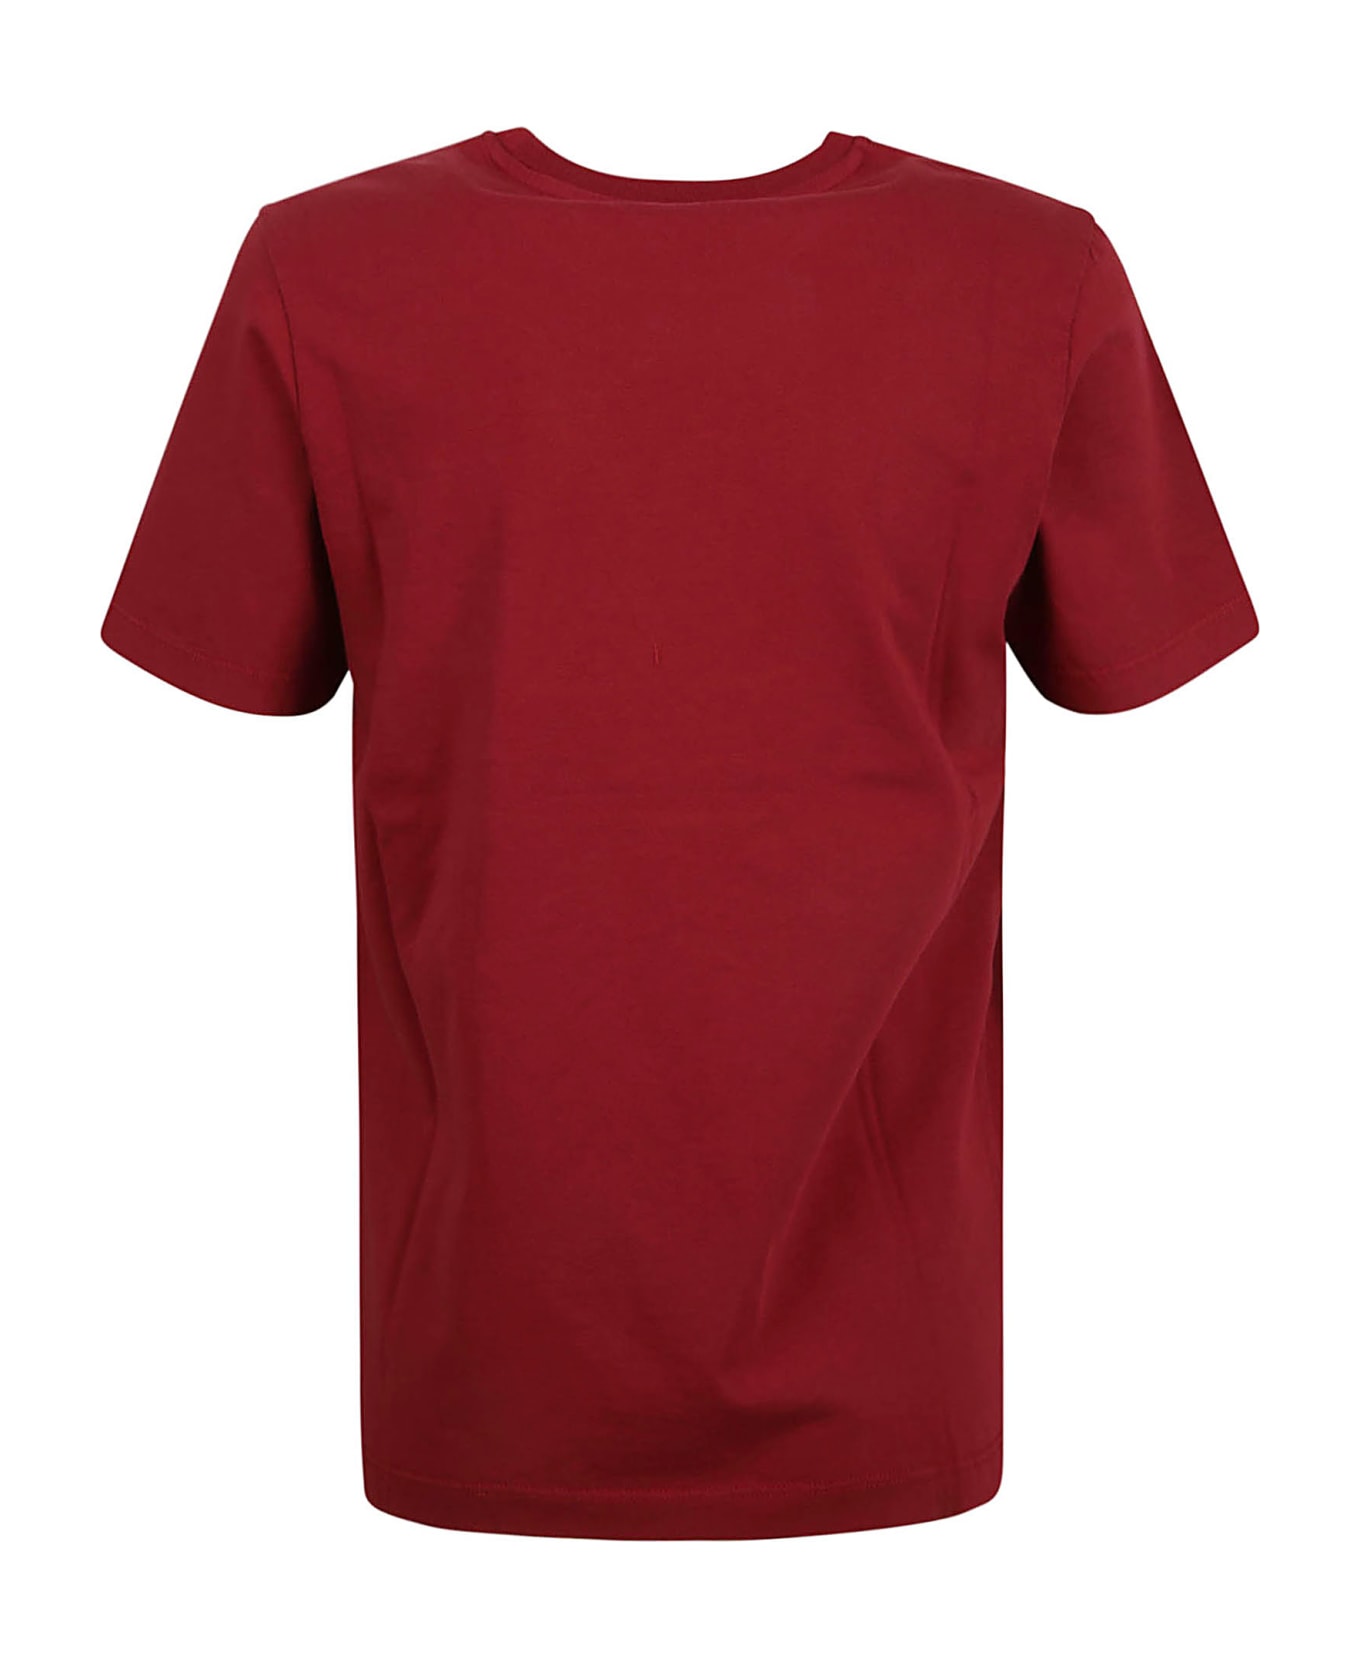 Maison Kitsuné Fox Head Patch Regular T-shirt - Brick Red